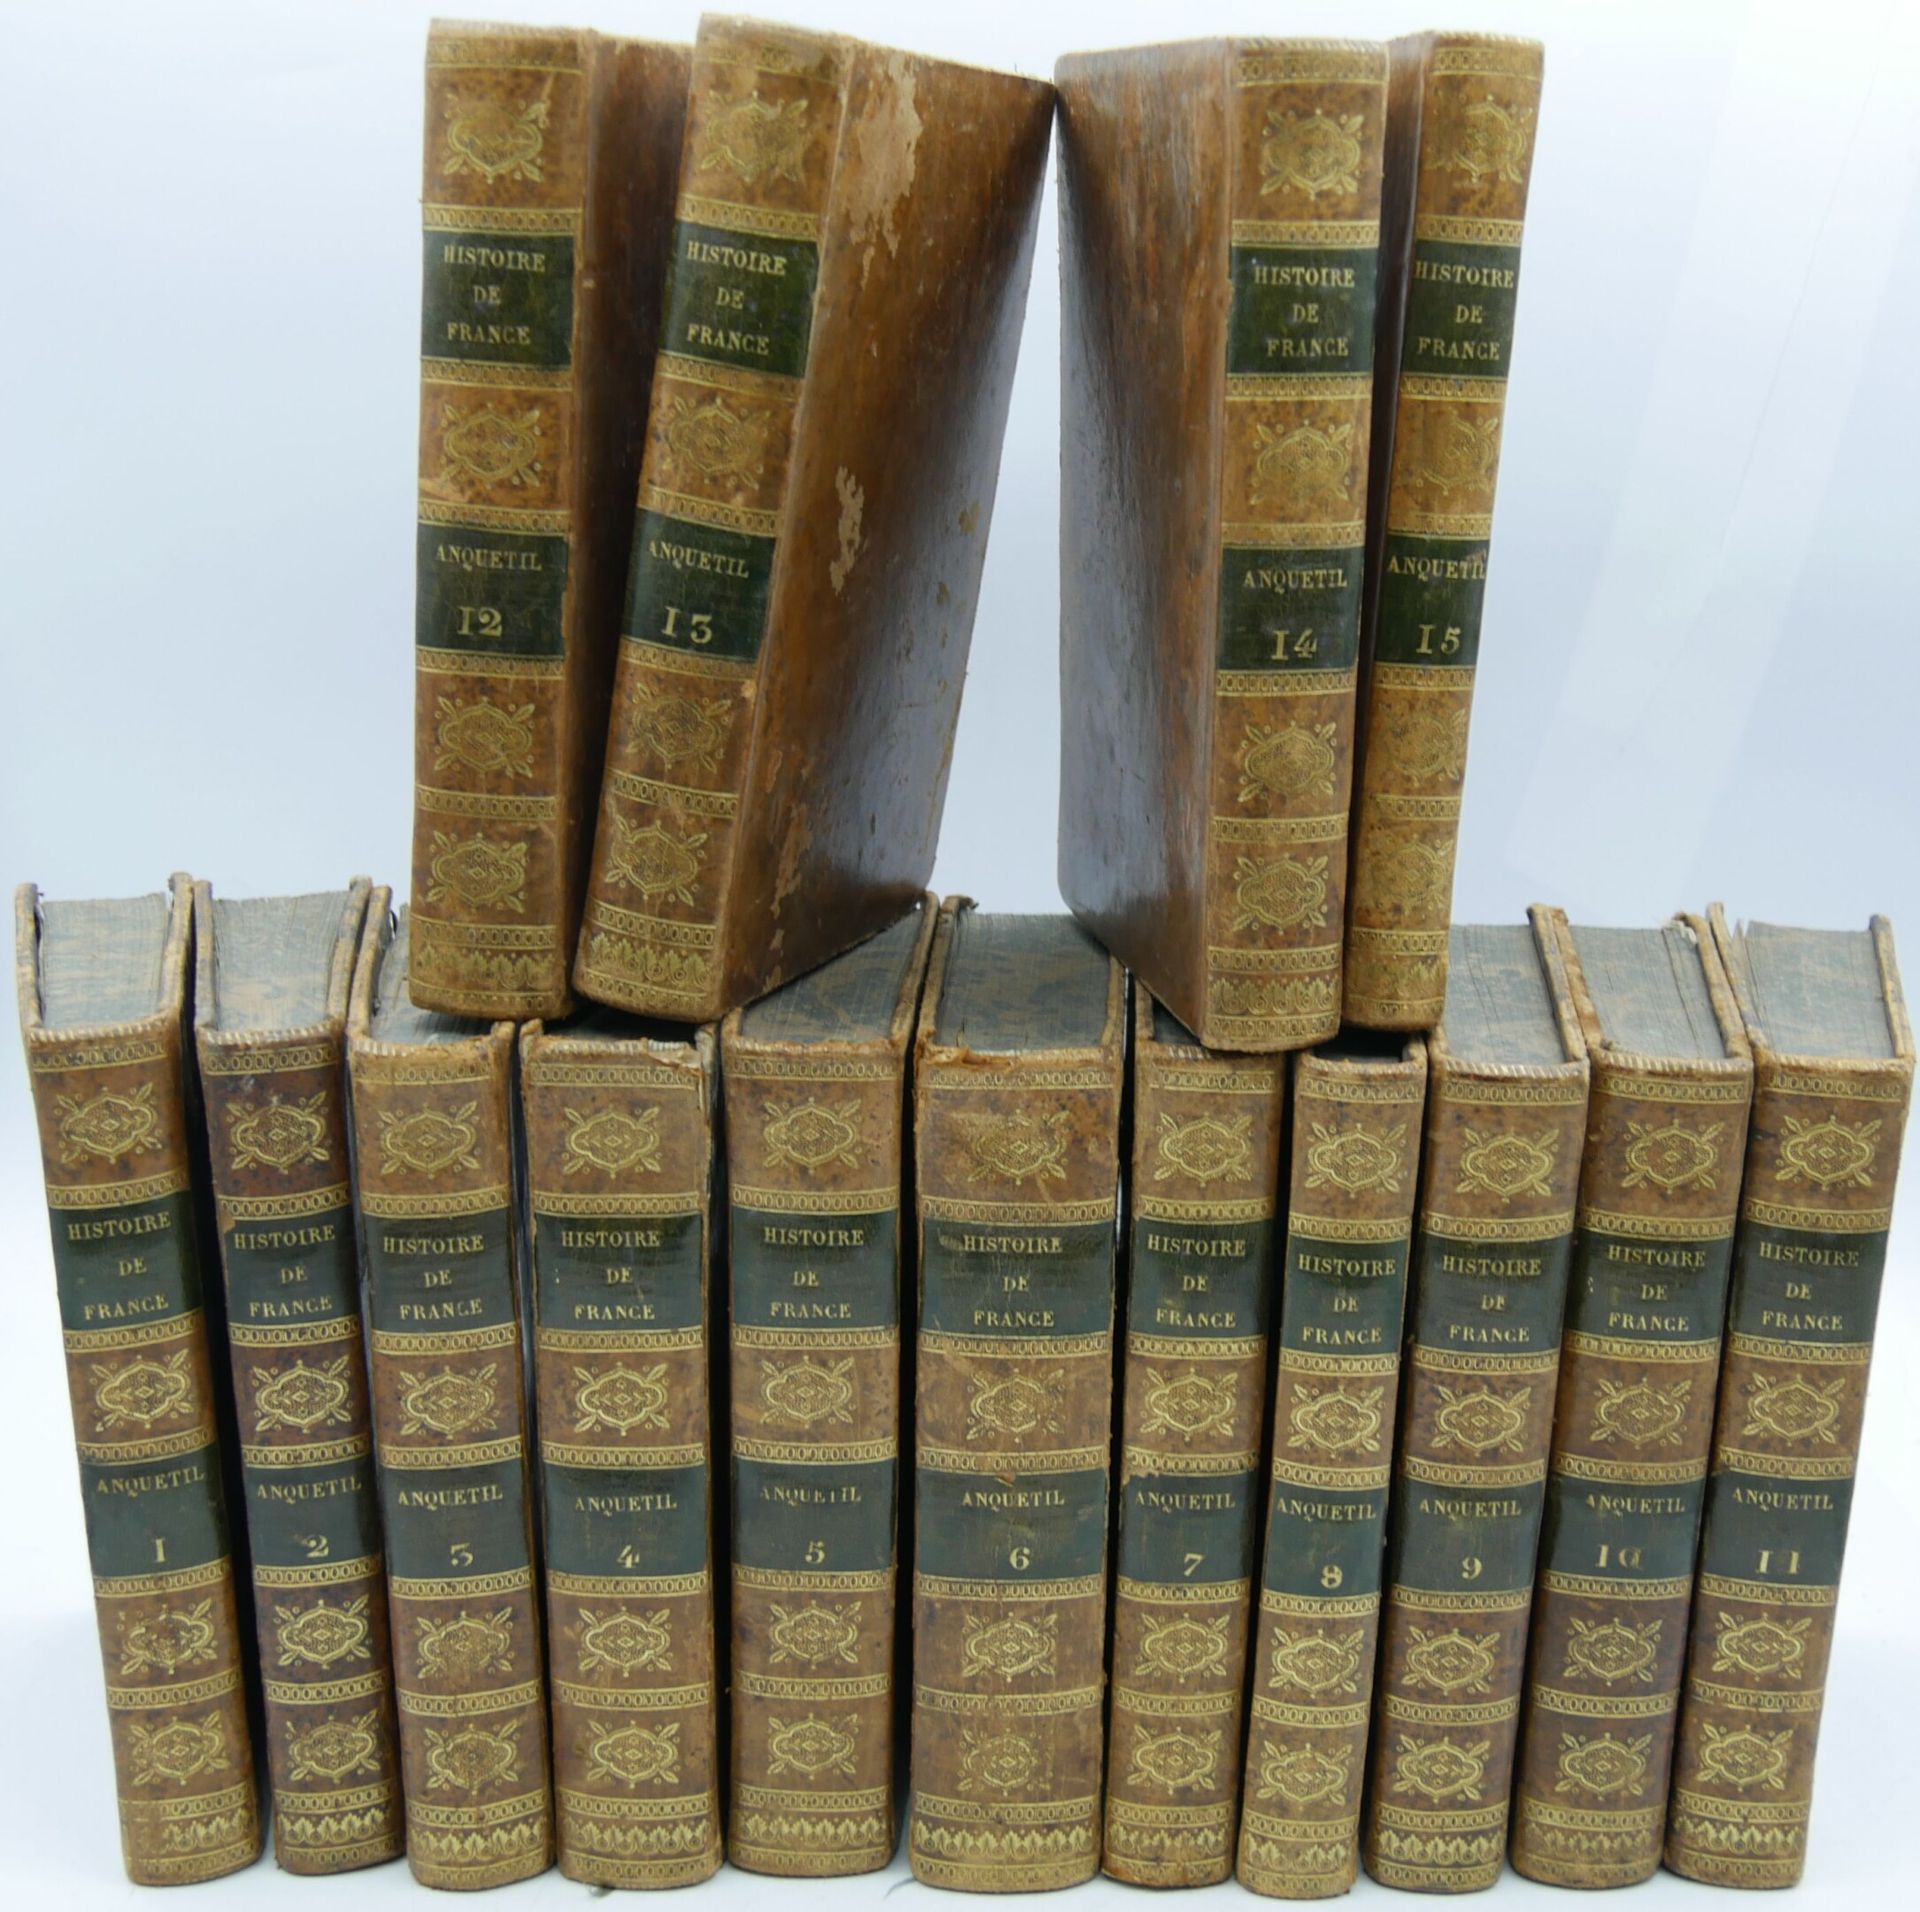 Null HISTOIRE DE France]. Insieme 21 volumi. Rilegature antiche.

15 volumi: Anq&hellip;